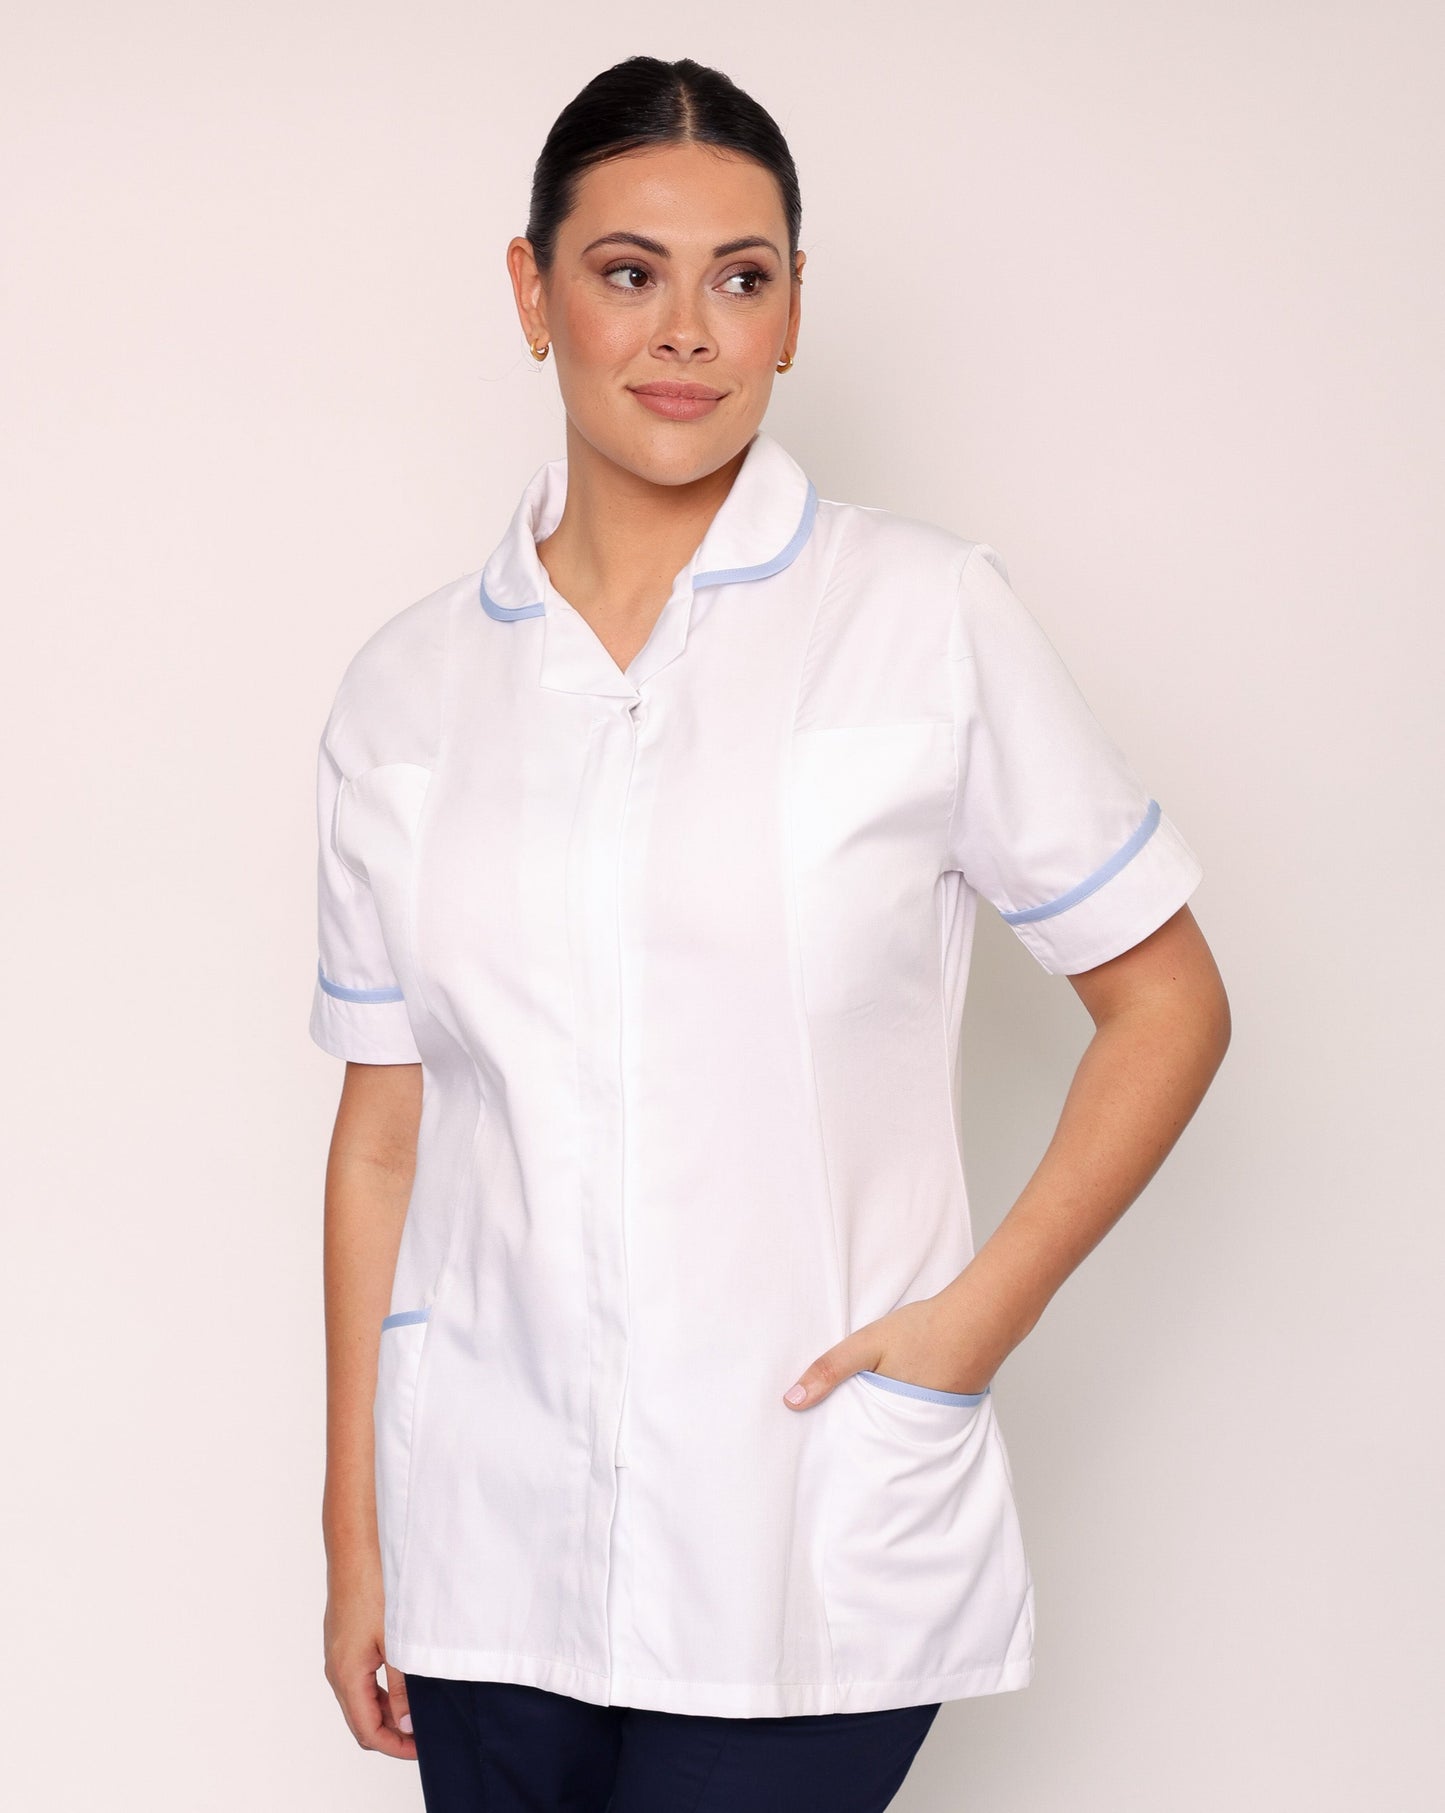 Alcott Ladies Healthcare Tunic - White Collection